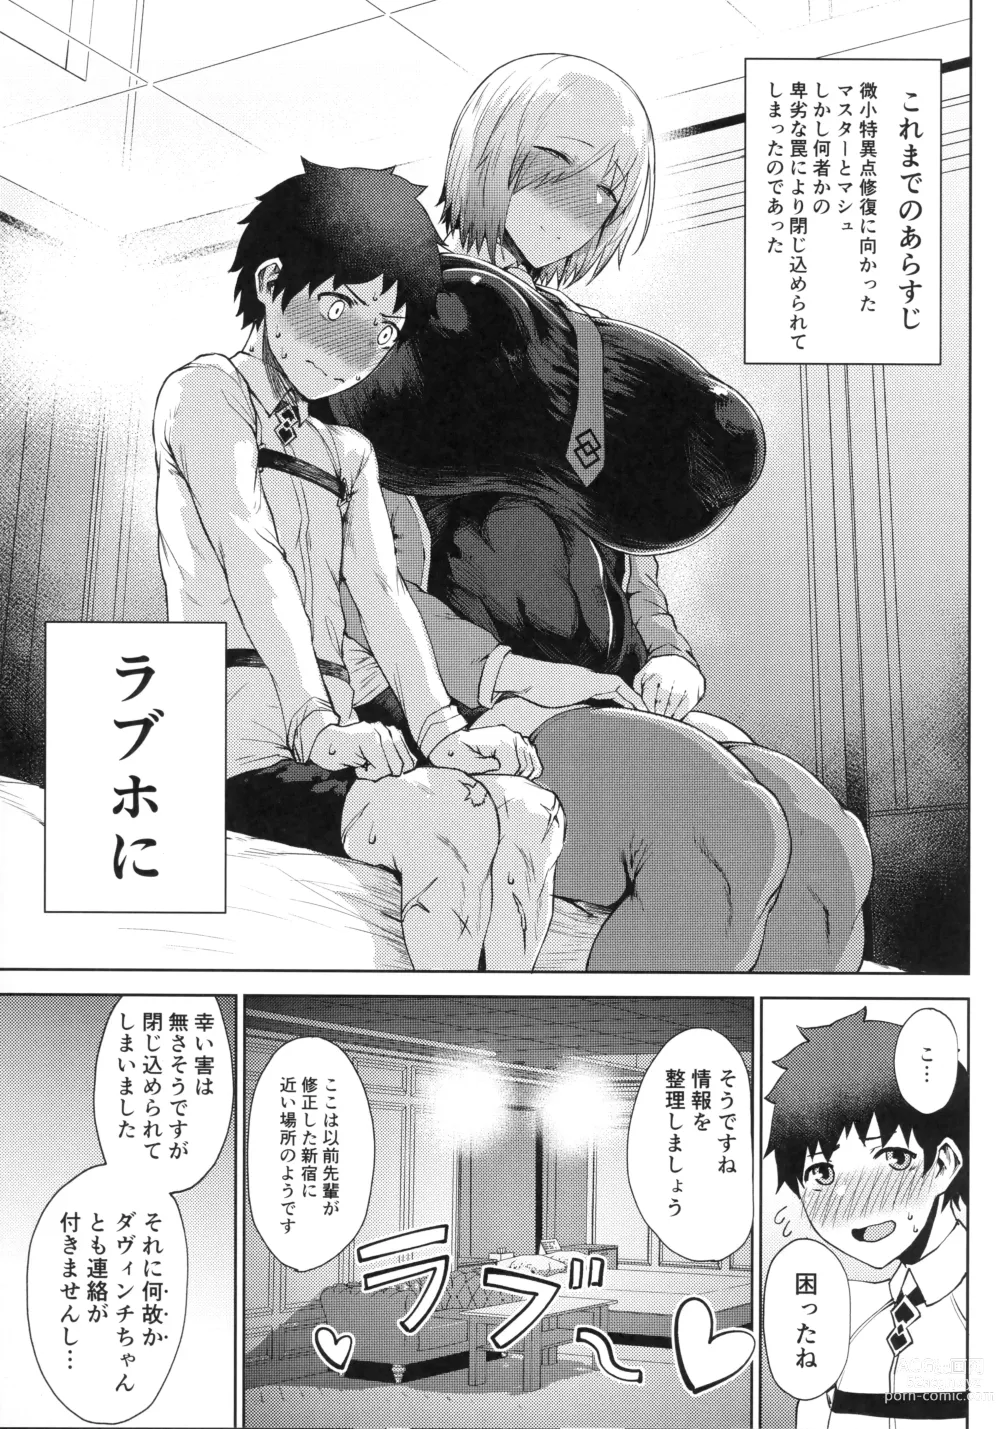 Page 2 of doujinshi Waruiko + Omake Paper